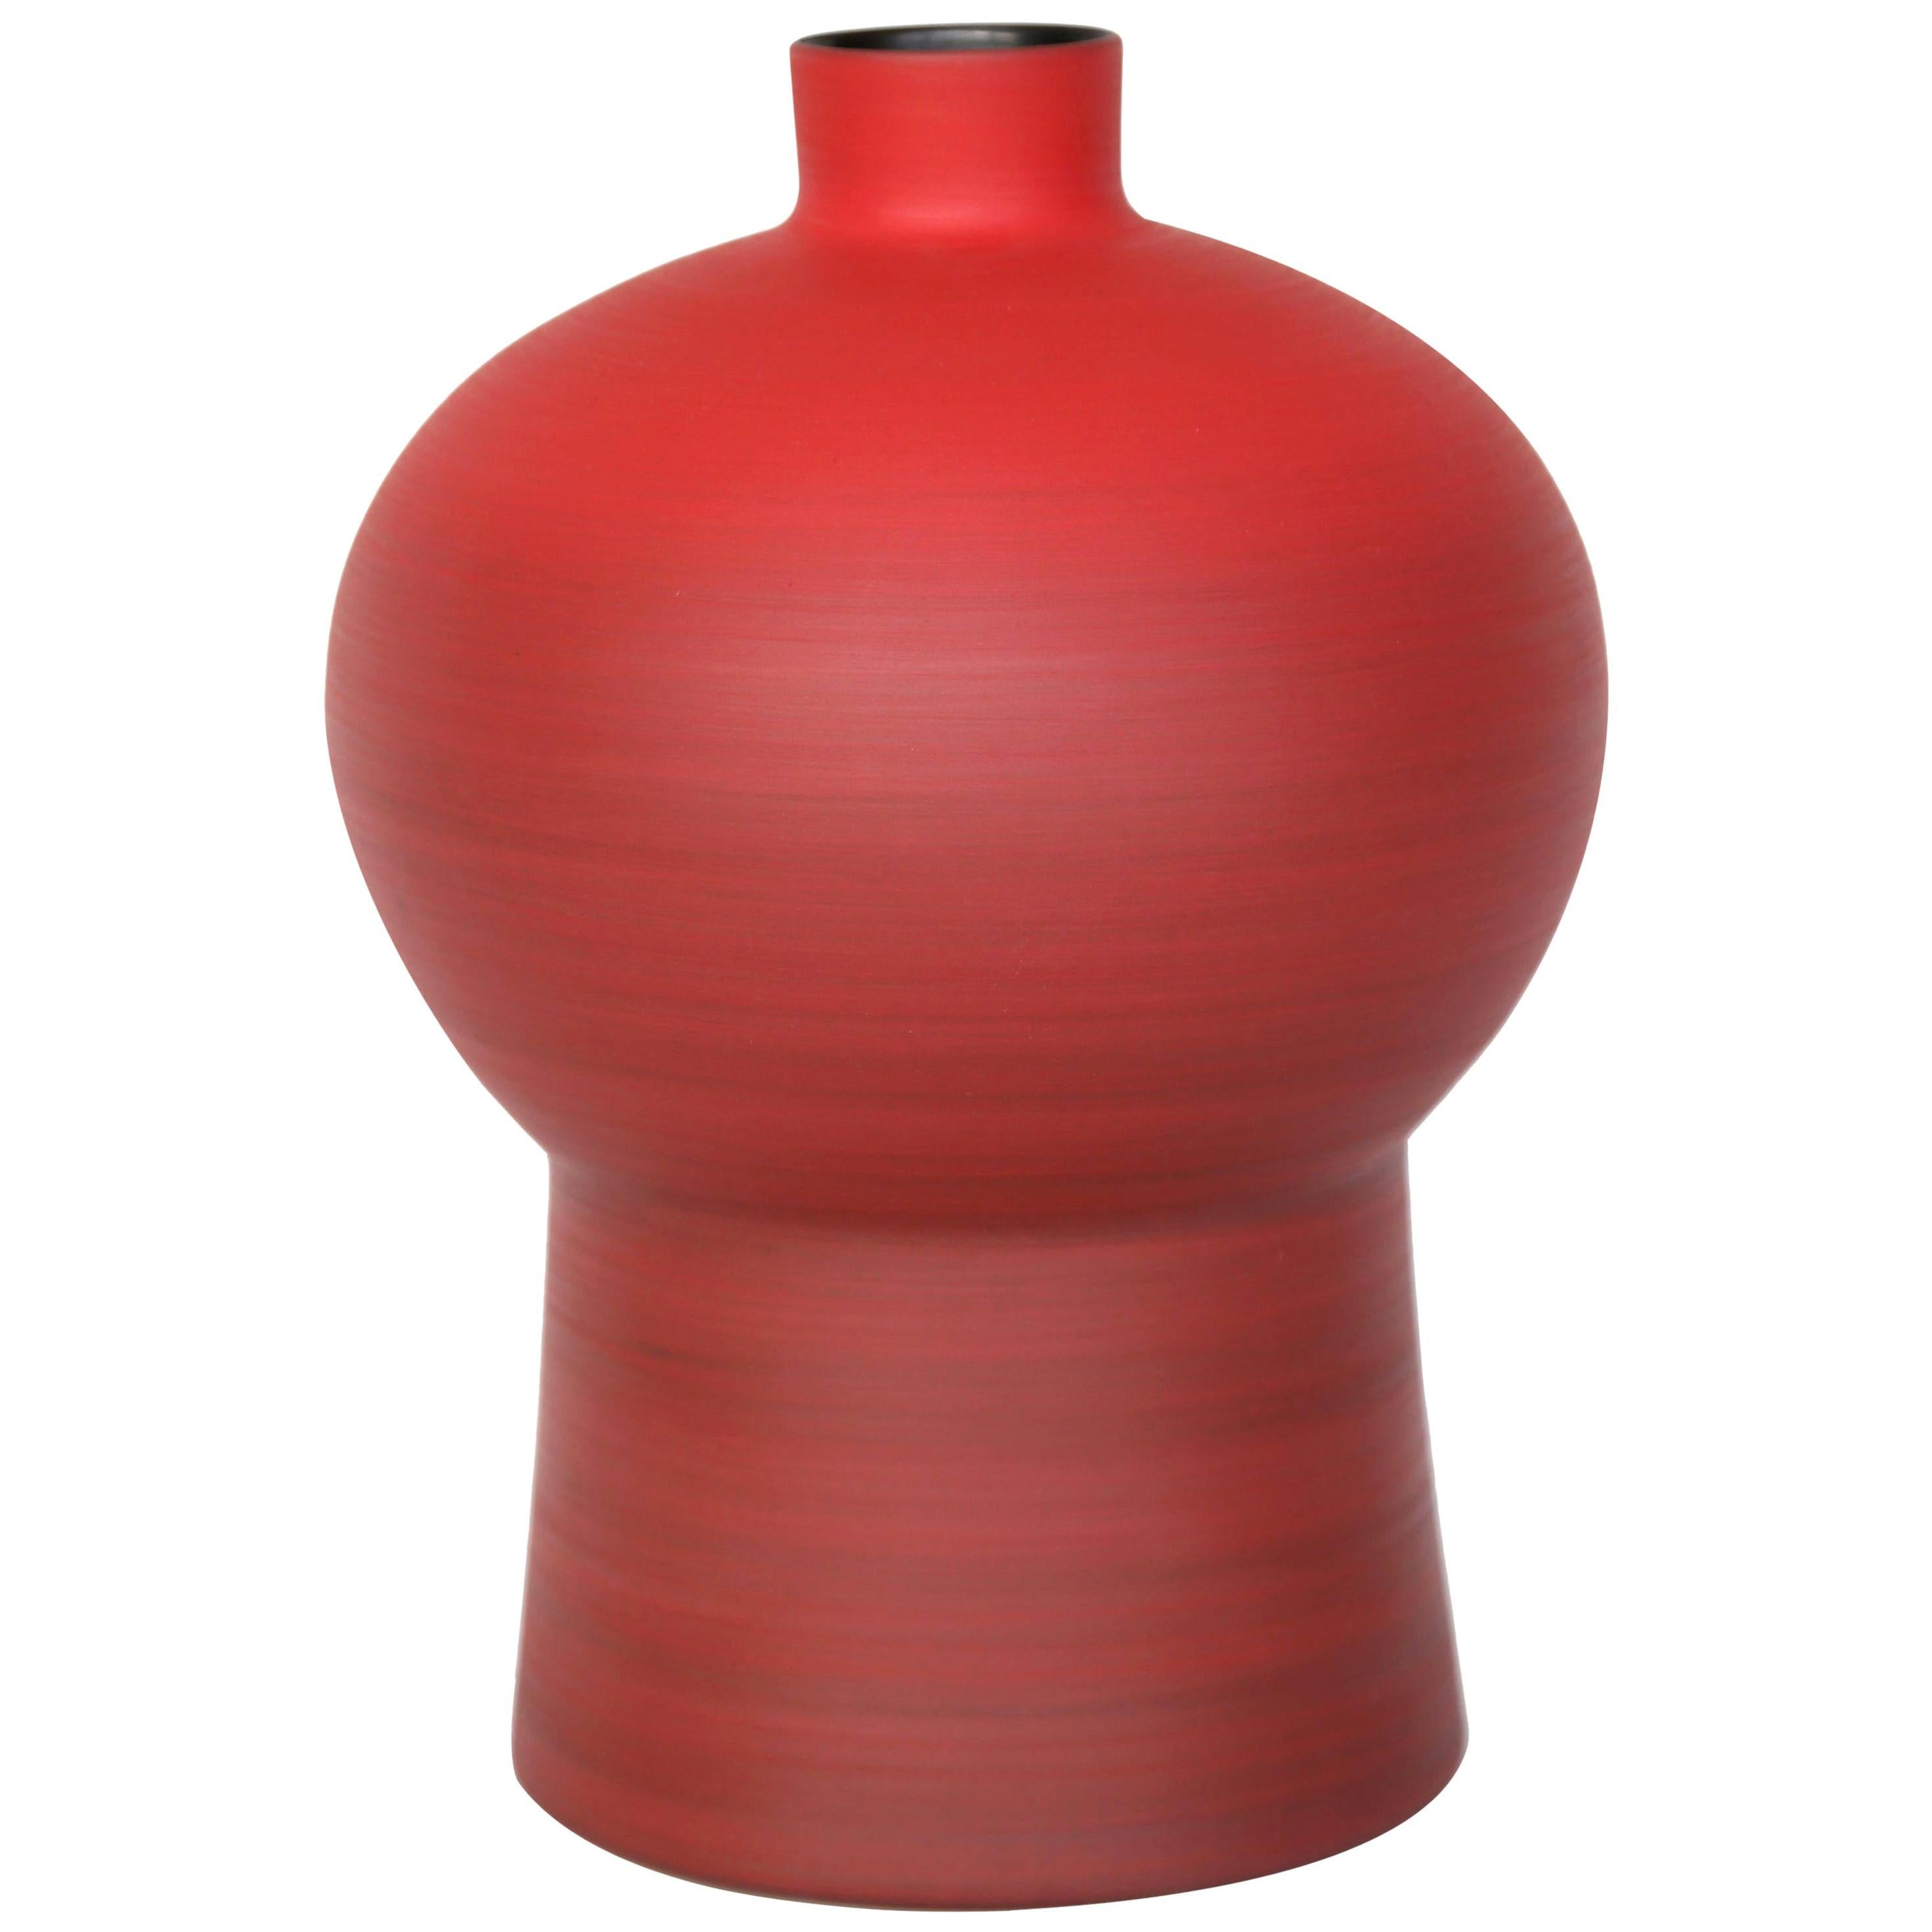 Rina Menardi Handmade Ceramic Royal Queen Red Vase